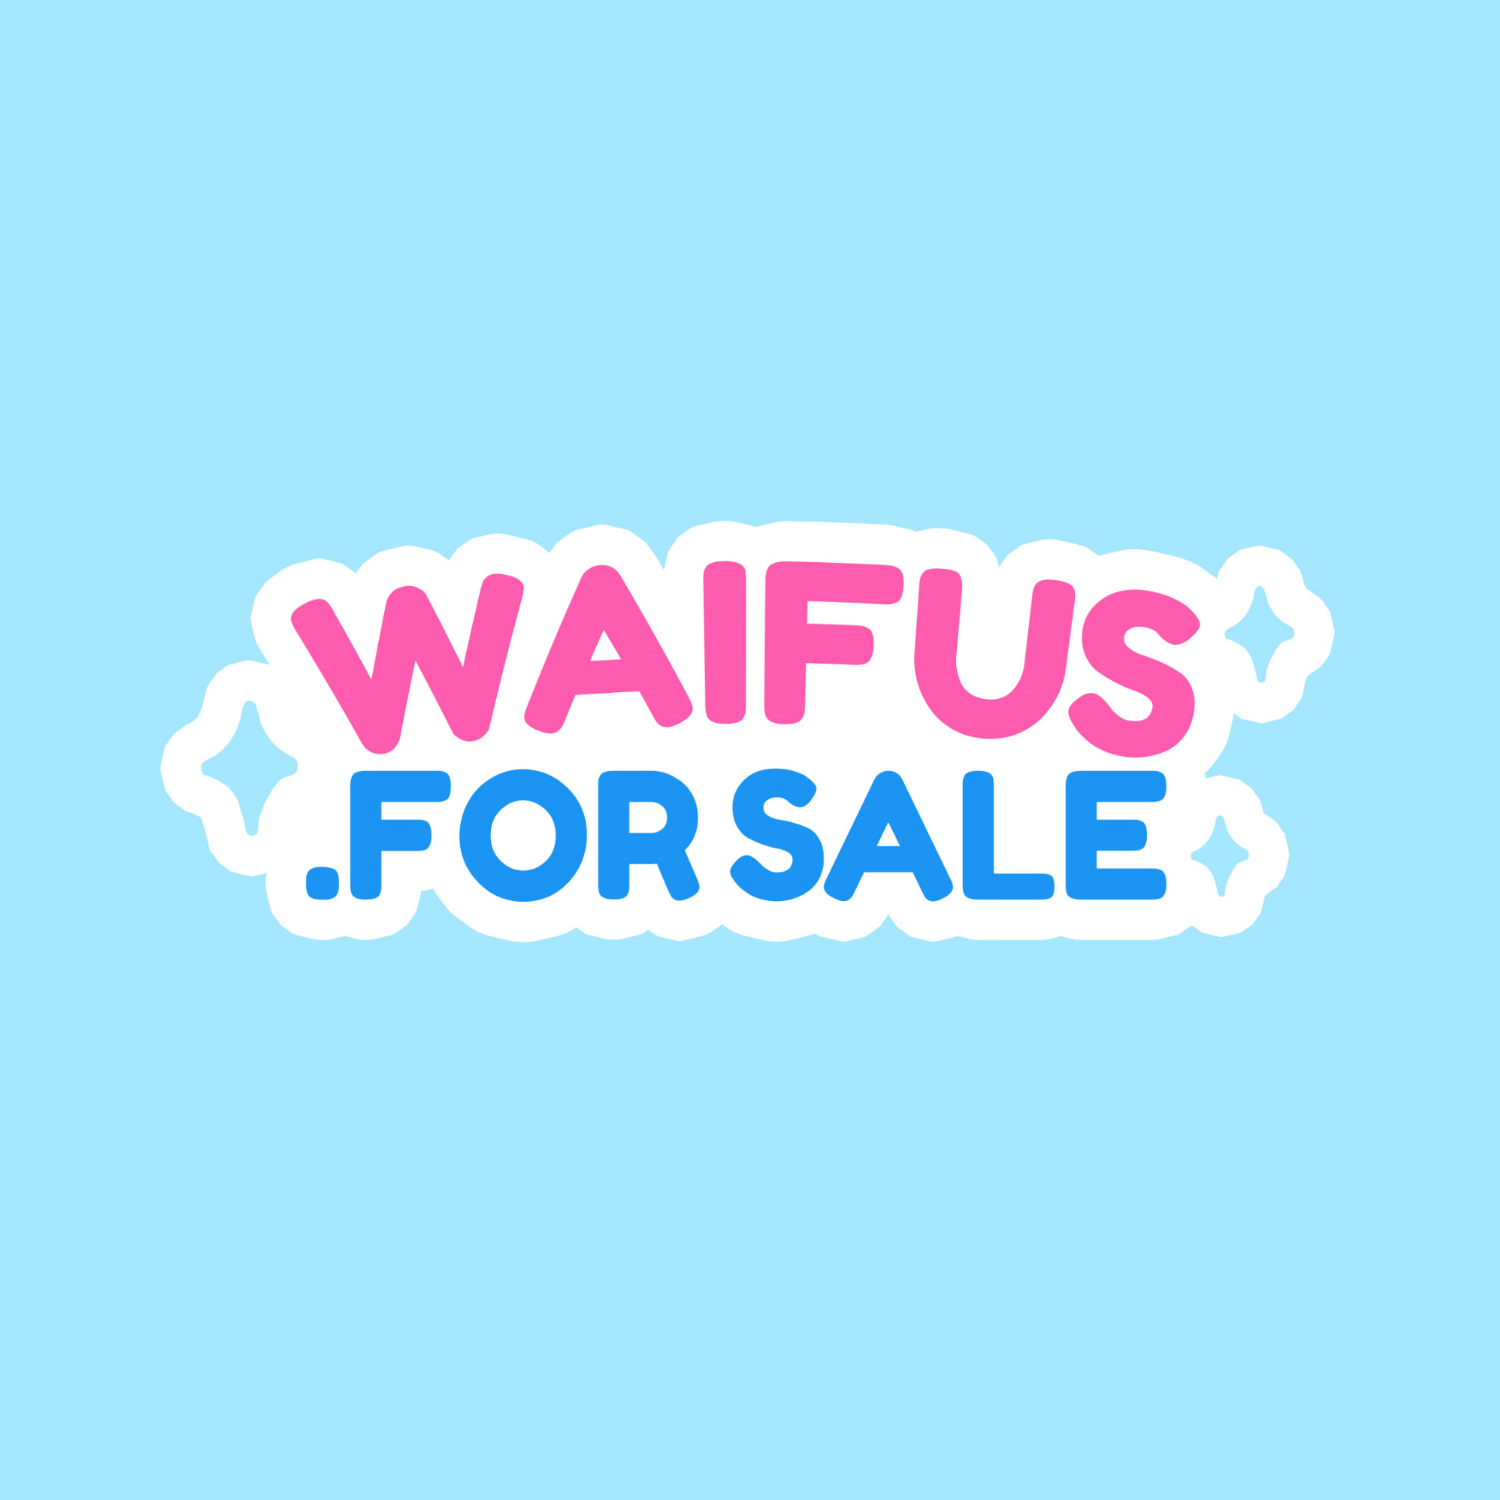 Waifus.forsale Logo